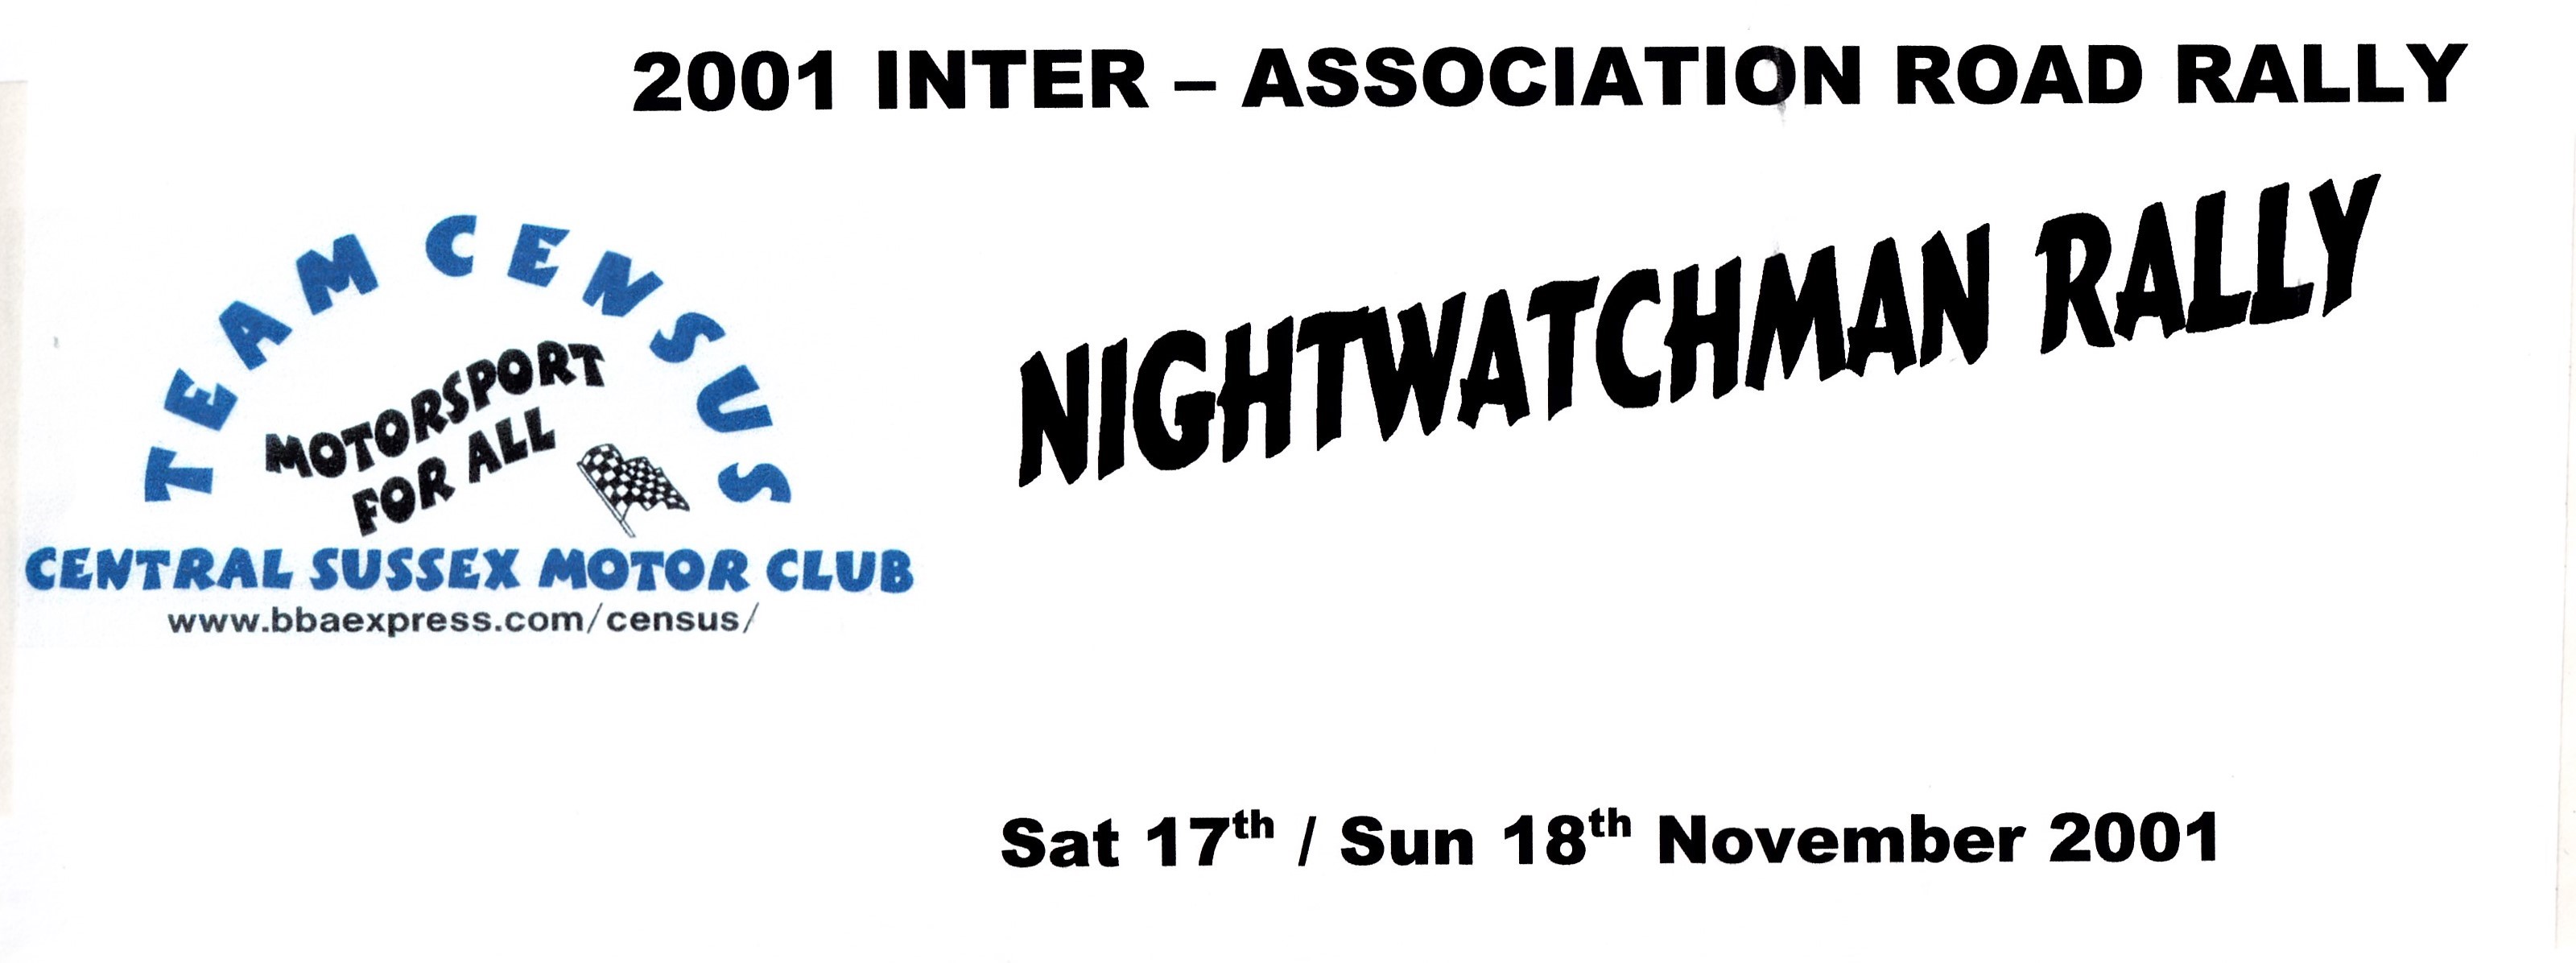 Nightwatchman Rally 2001